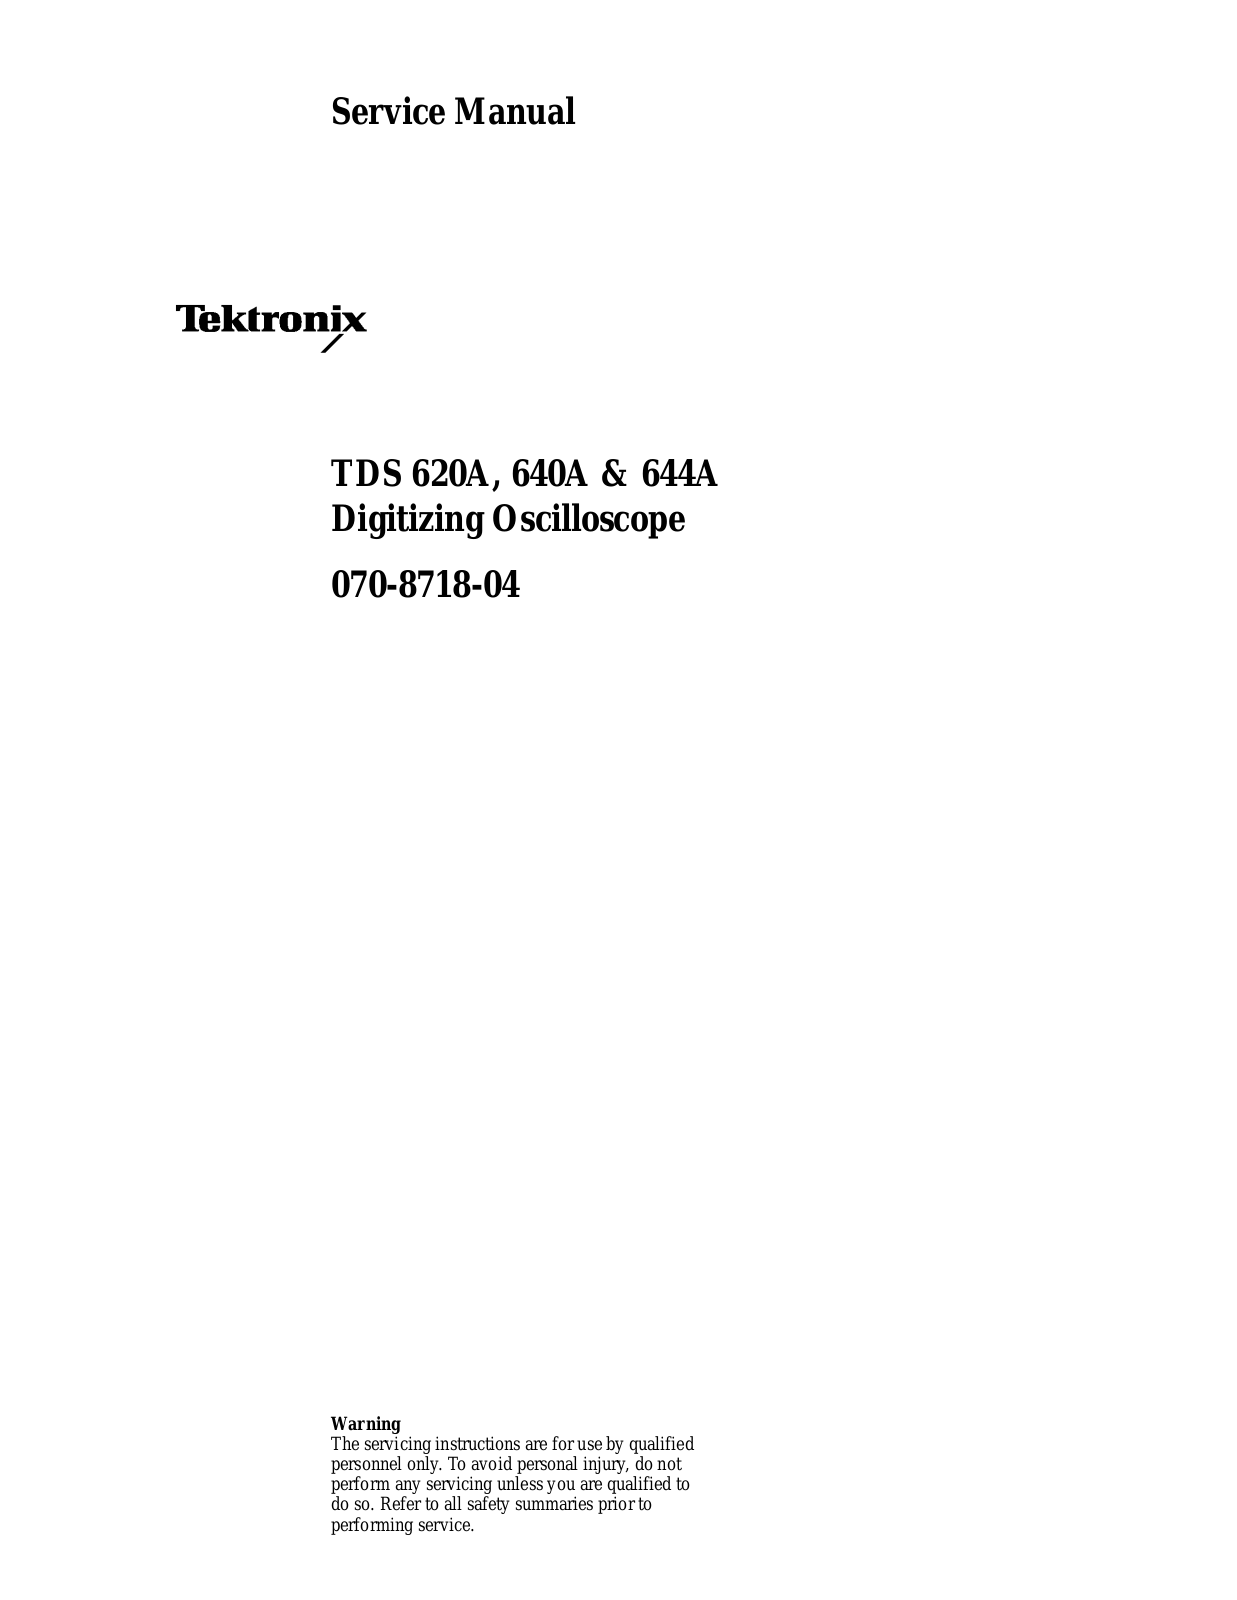 Tektronix TDS 644A, TDS 640A, TDS 620A Service Manual